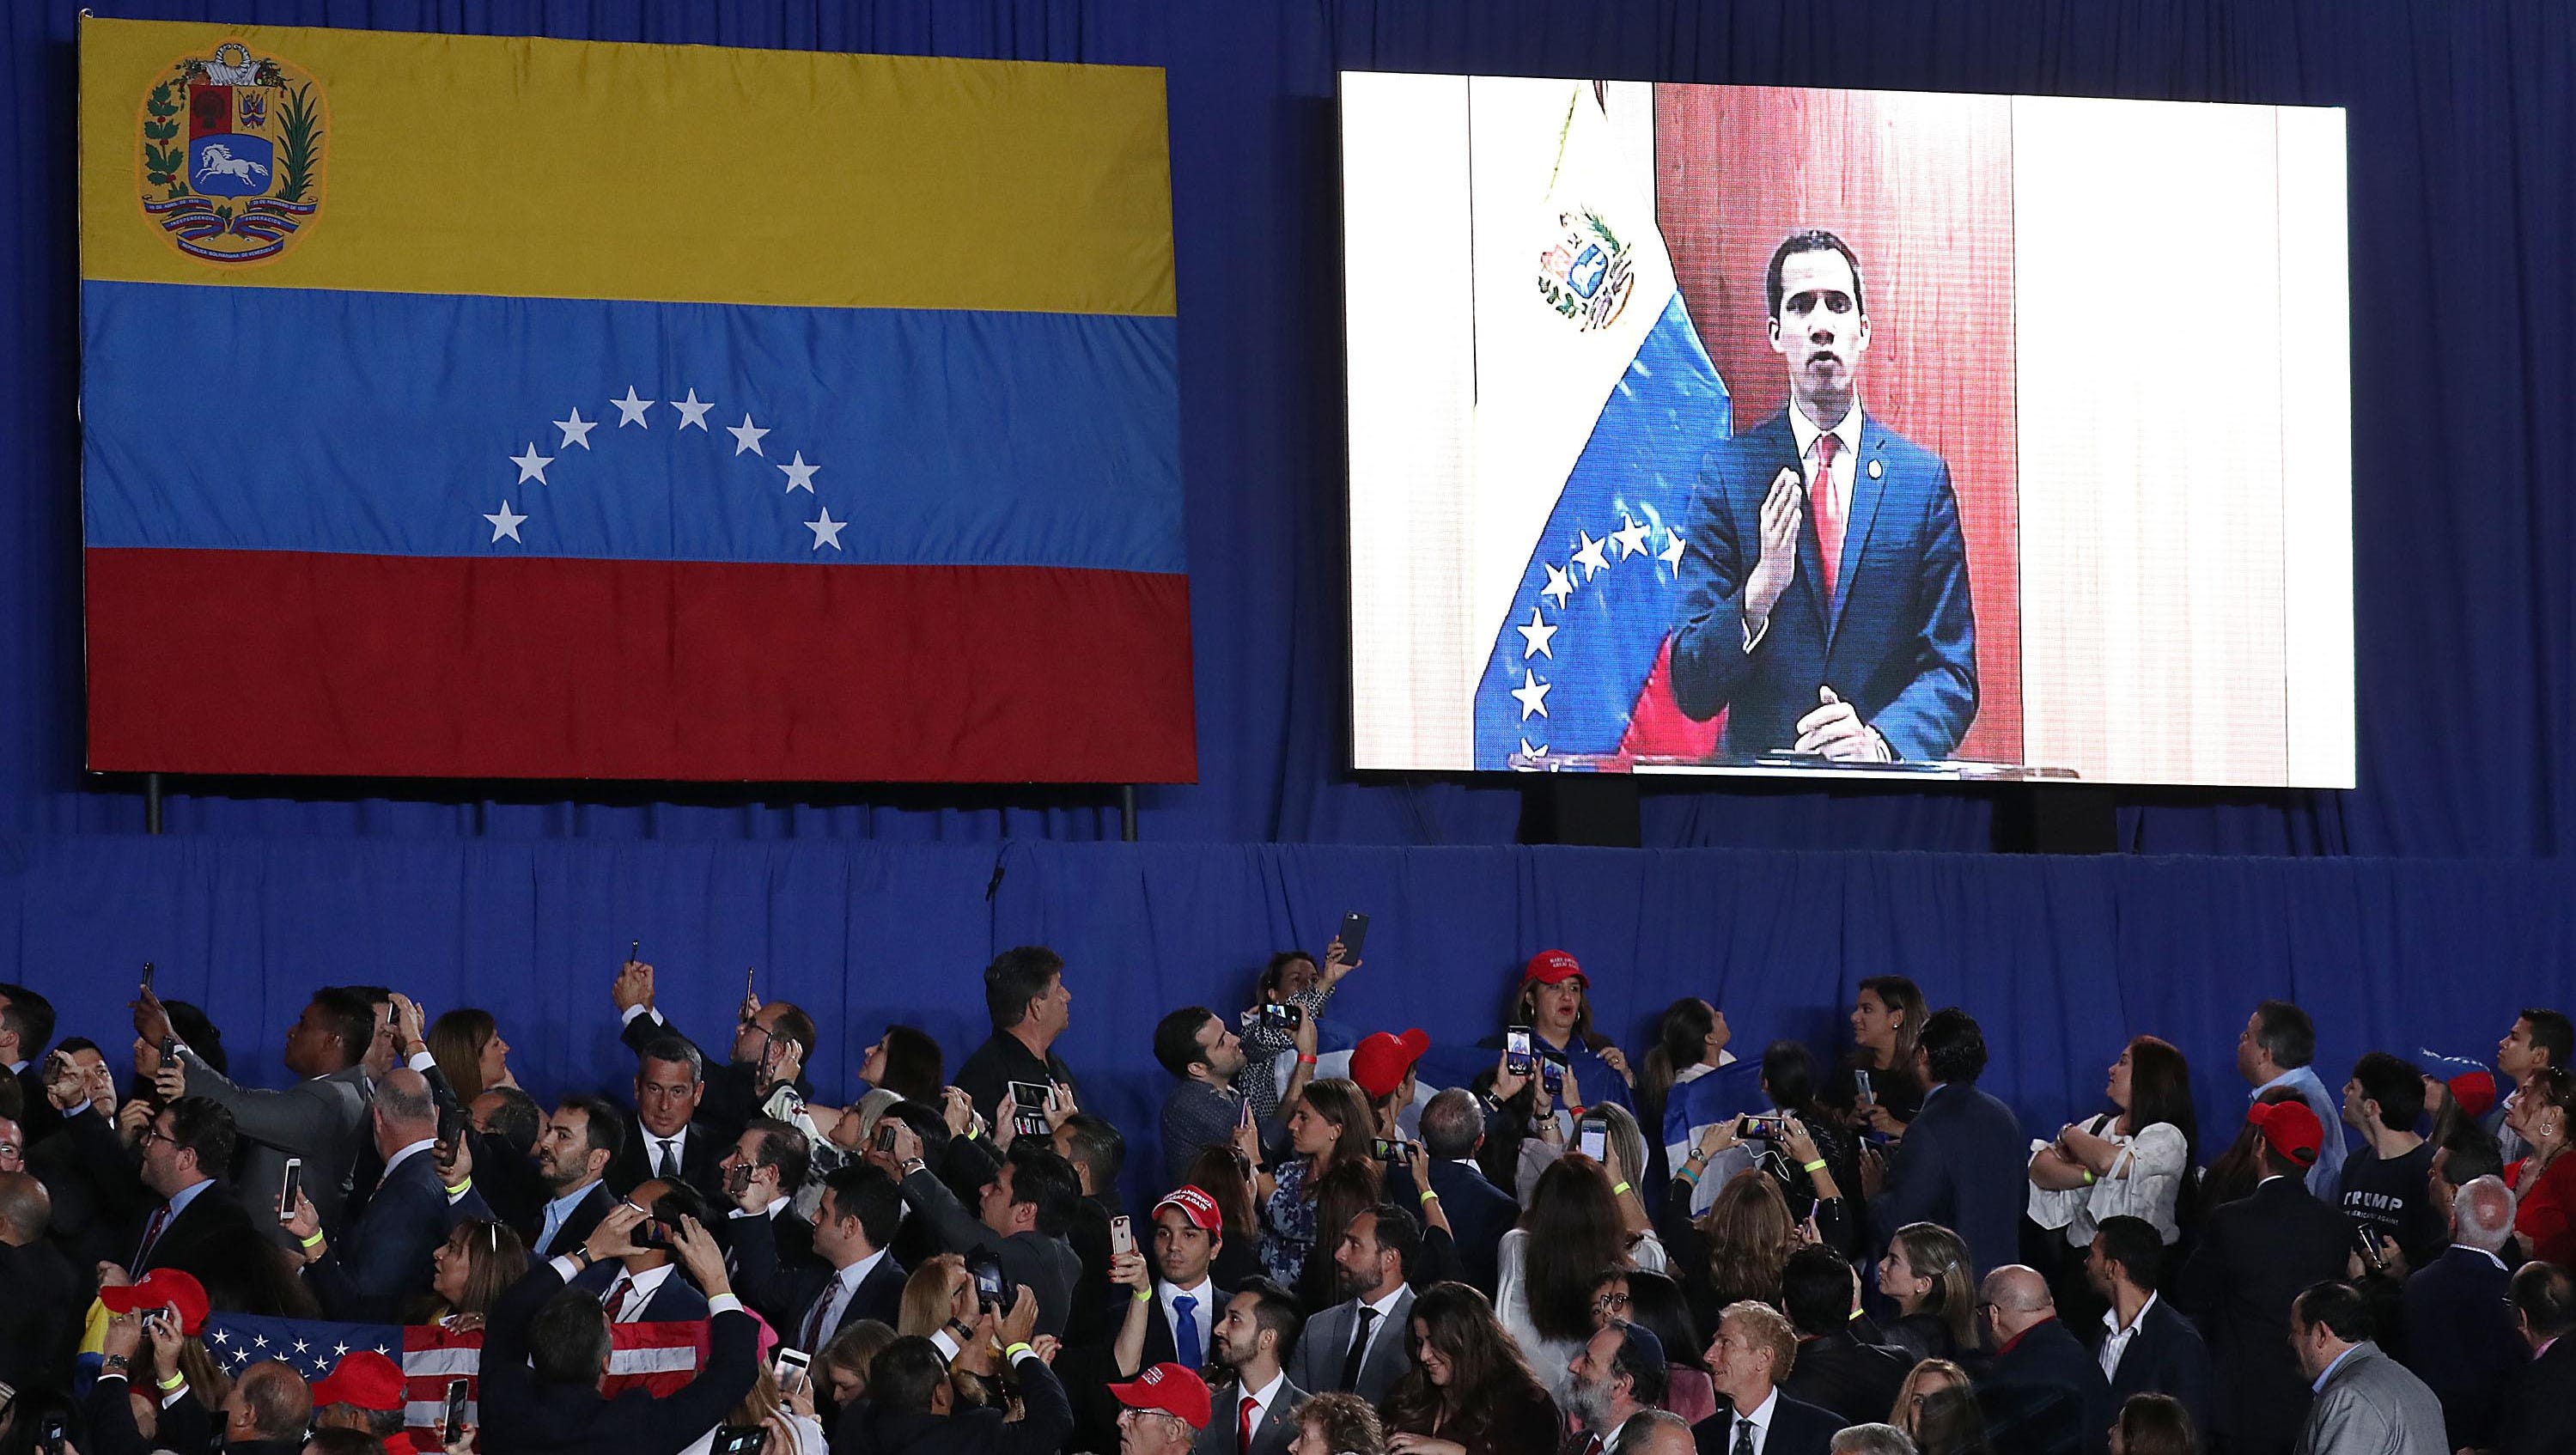 Venezuelan opposition leader Juan Guaido speaks via a telecast to a crowd at Florida International University. South Florida is home to more than 100,000 Venezuelans and Venezuelan-Americans.